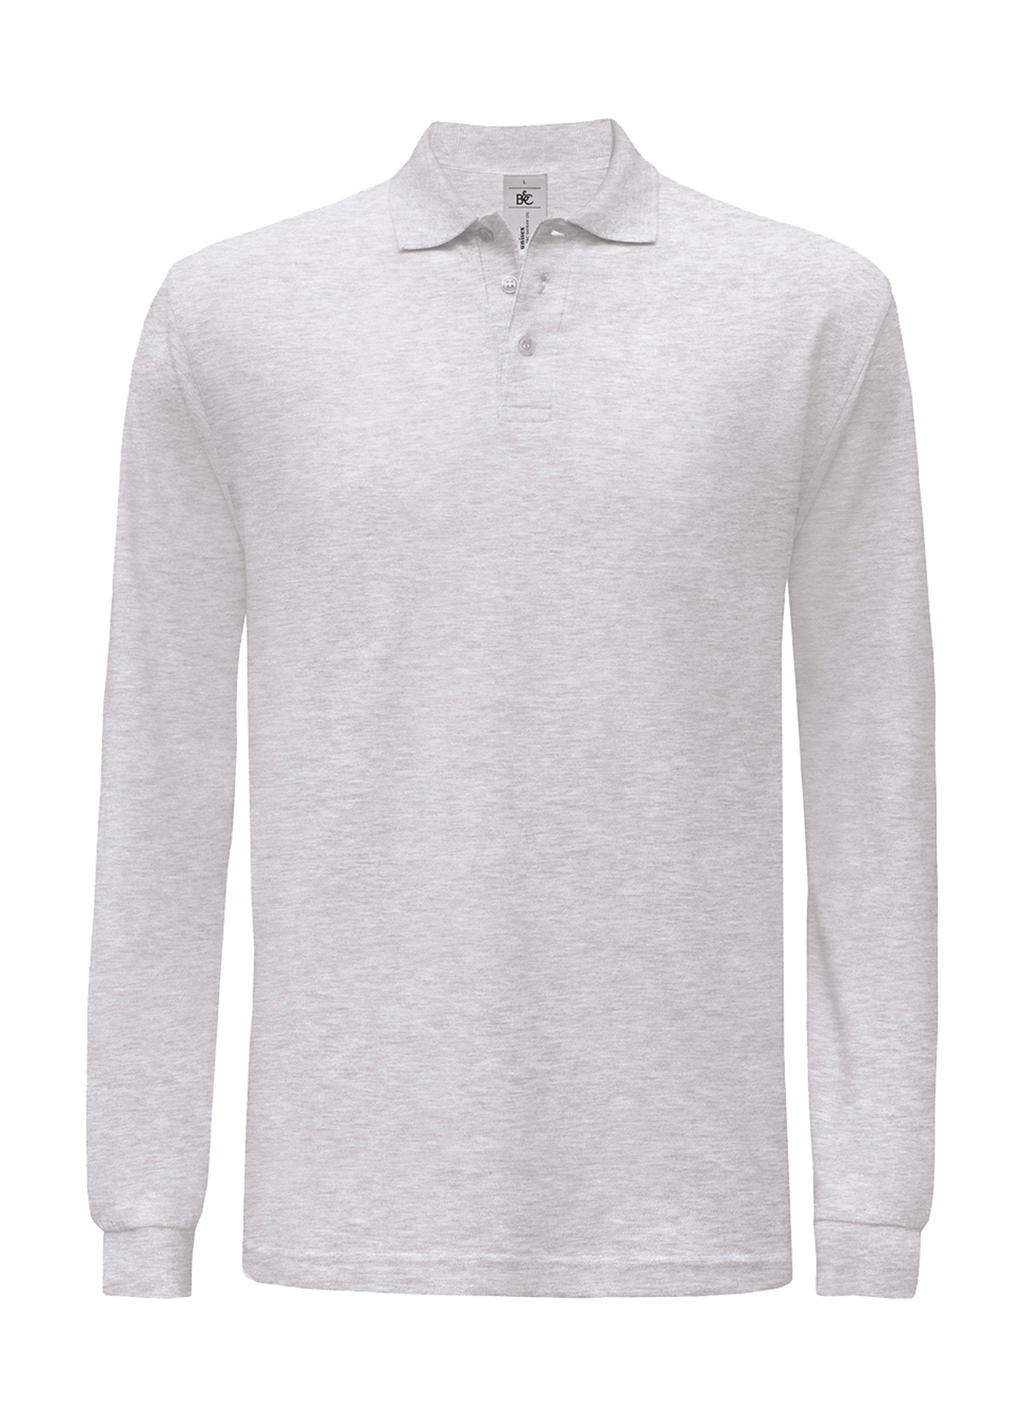 B&C Damen Polo Shirt T Shirt Kragen Basic Poloshirt T-Shirt langarm